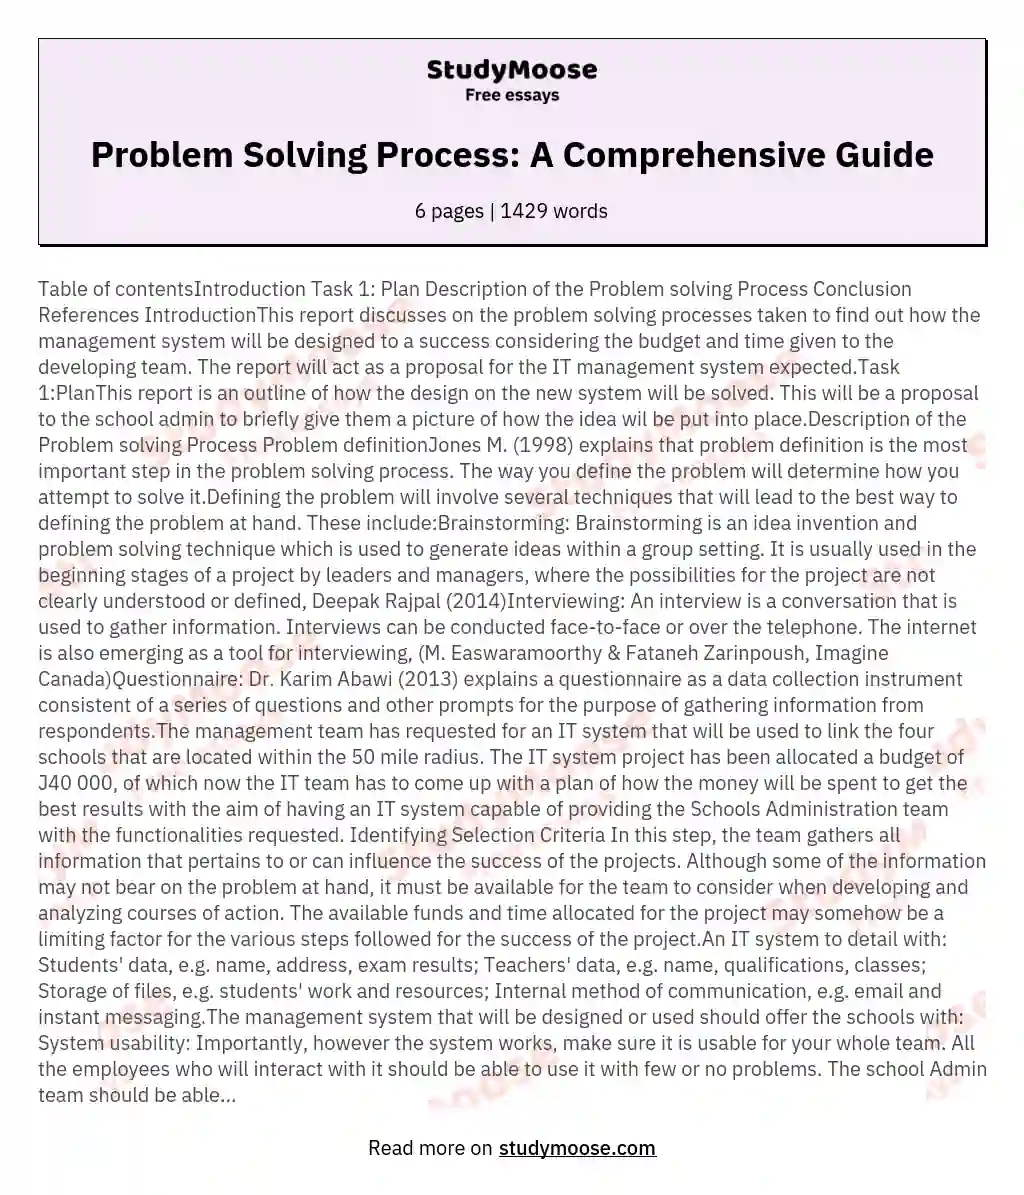 Problem Solving Process: A Comprehensive Guide essay